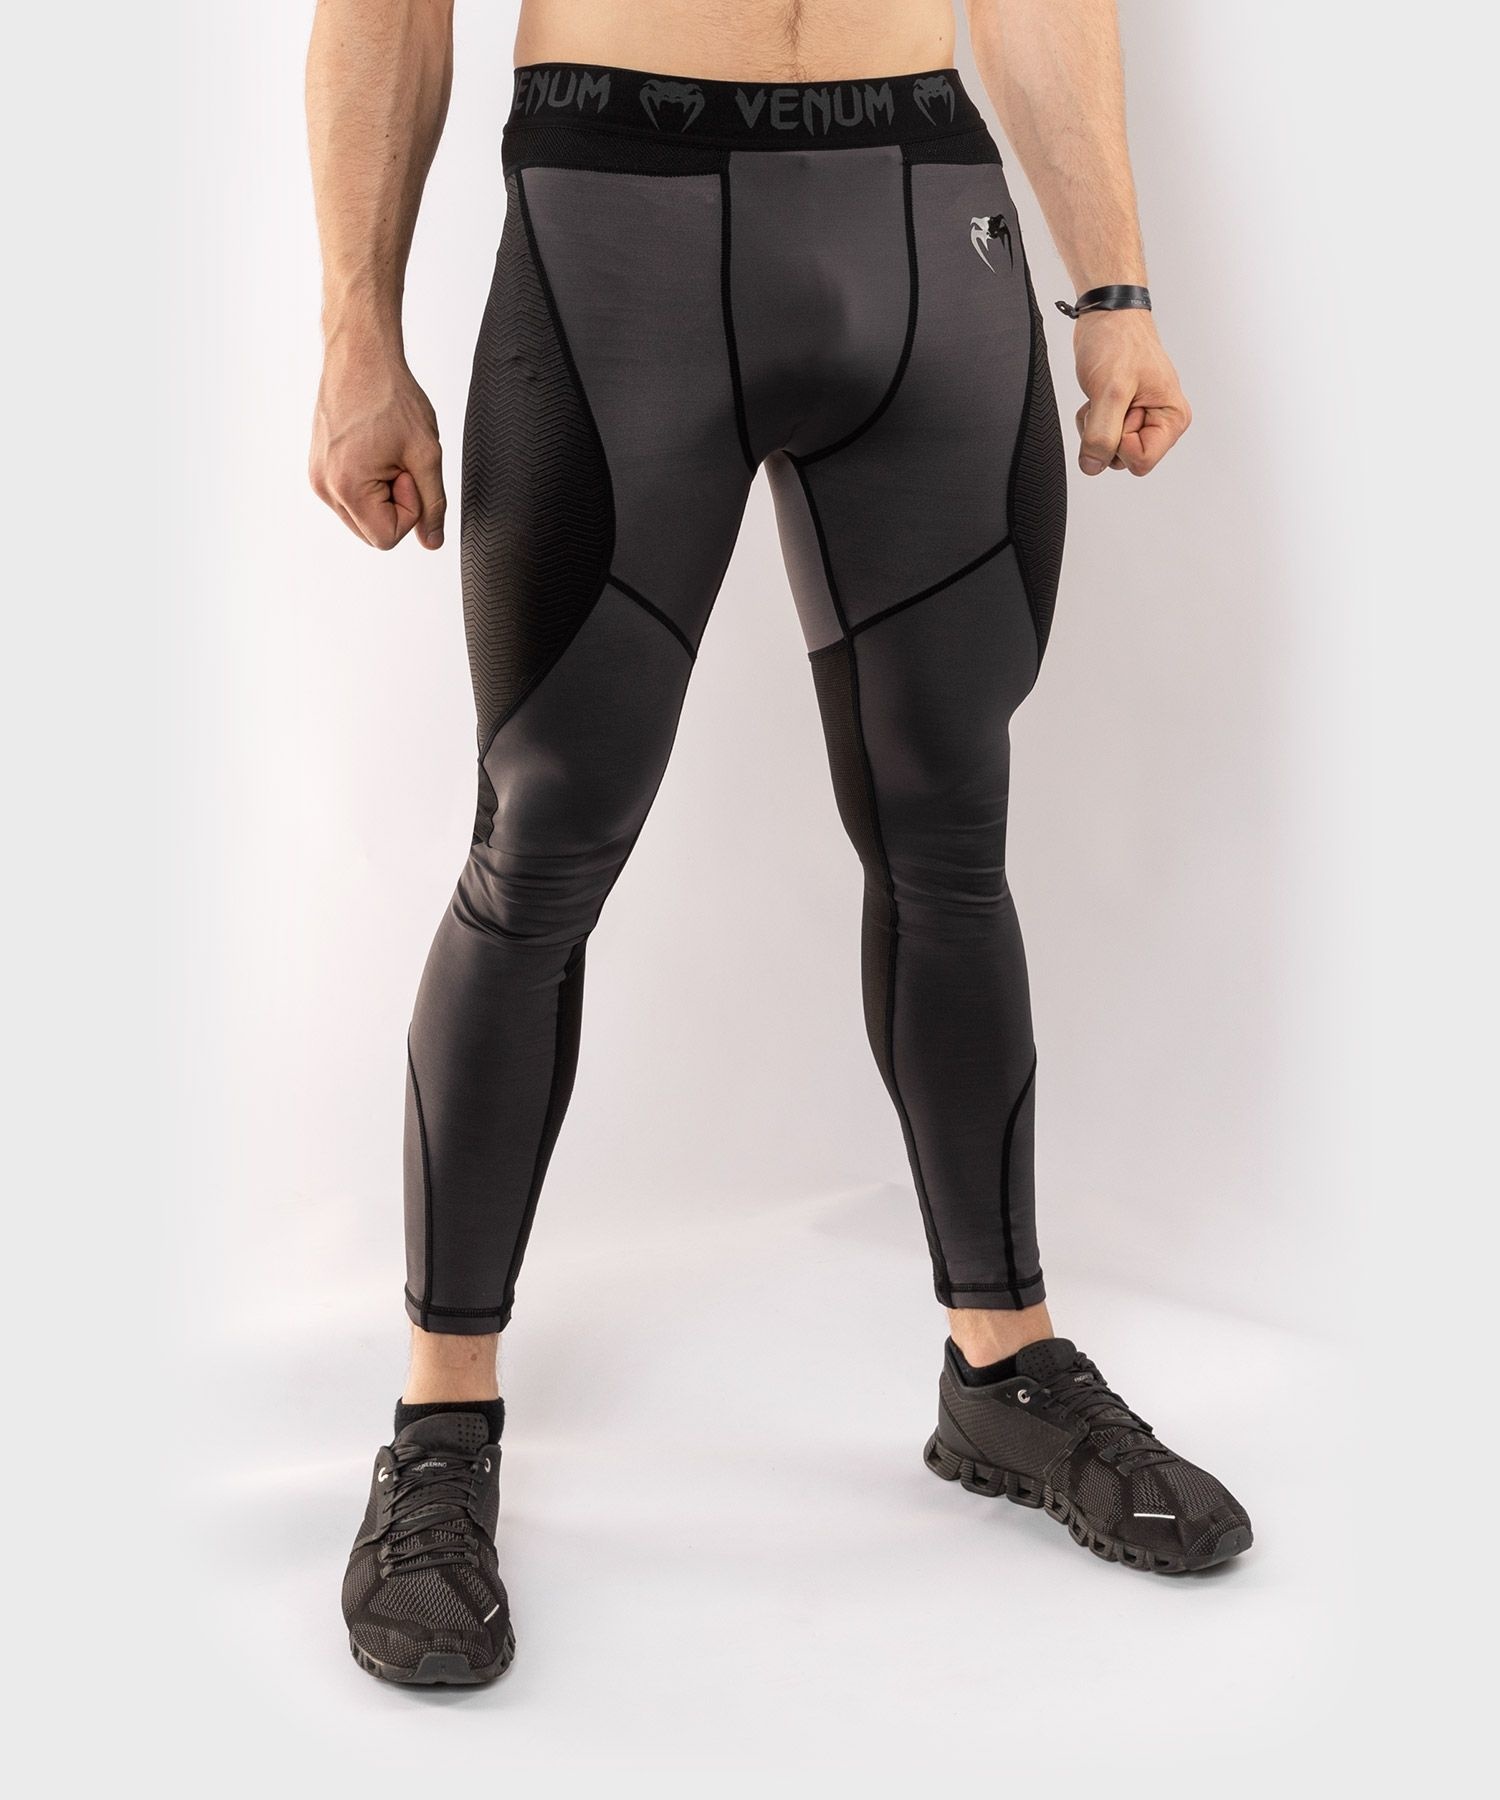 Venum Legging G-Fit Compression Pants Grey Black - FIGHTWEAR SHOP